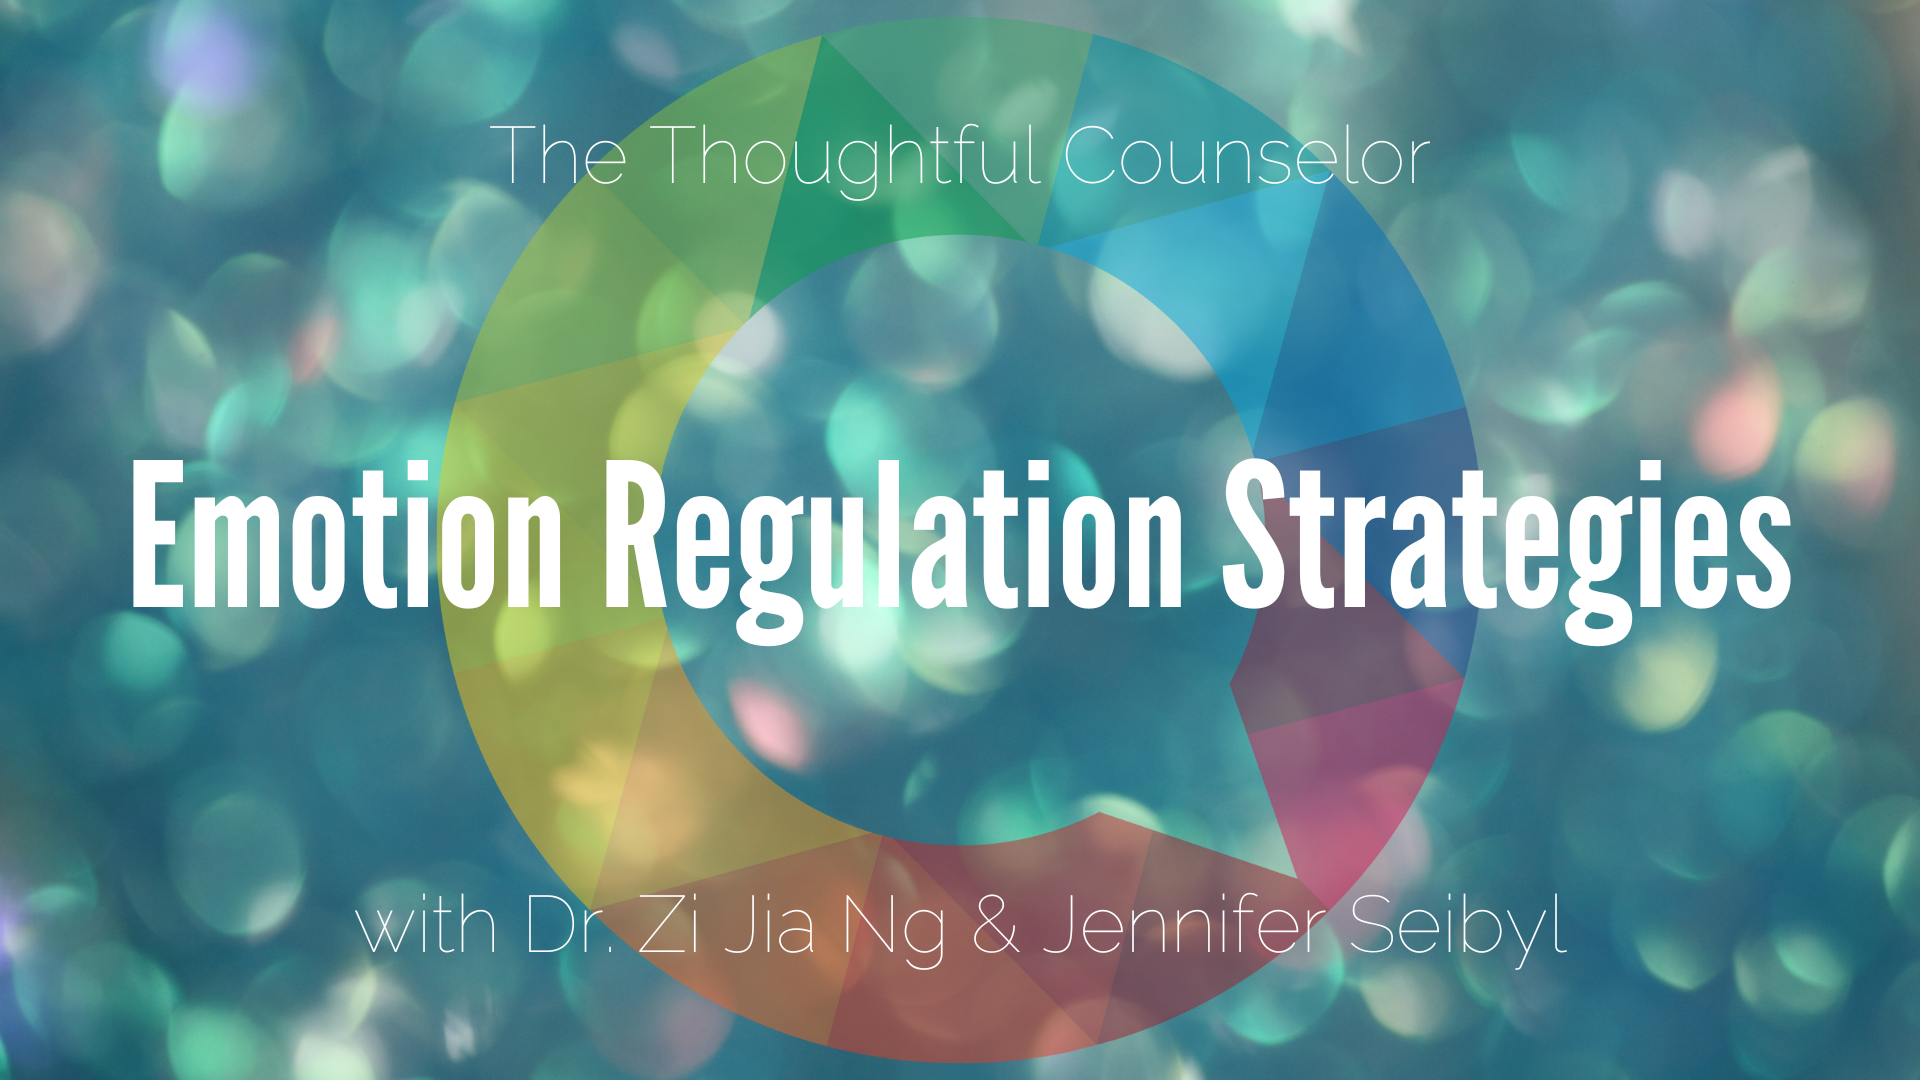 Emotion Regulation Strategies for Children and Adolescents